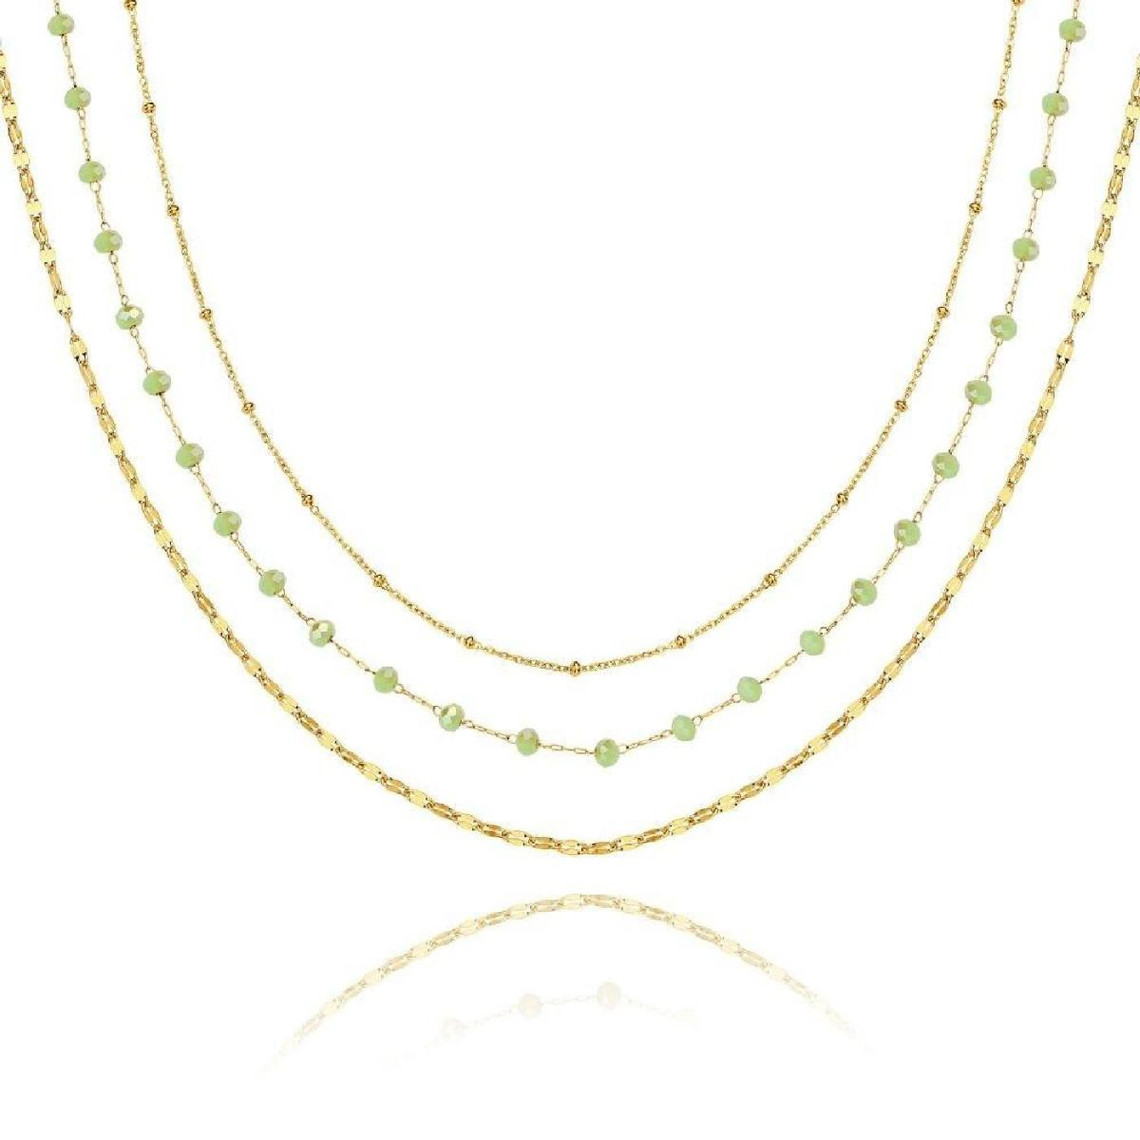 collier femme pixies bijoux - pnm0008-1gre acier vert